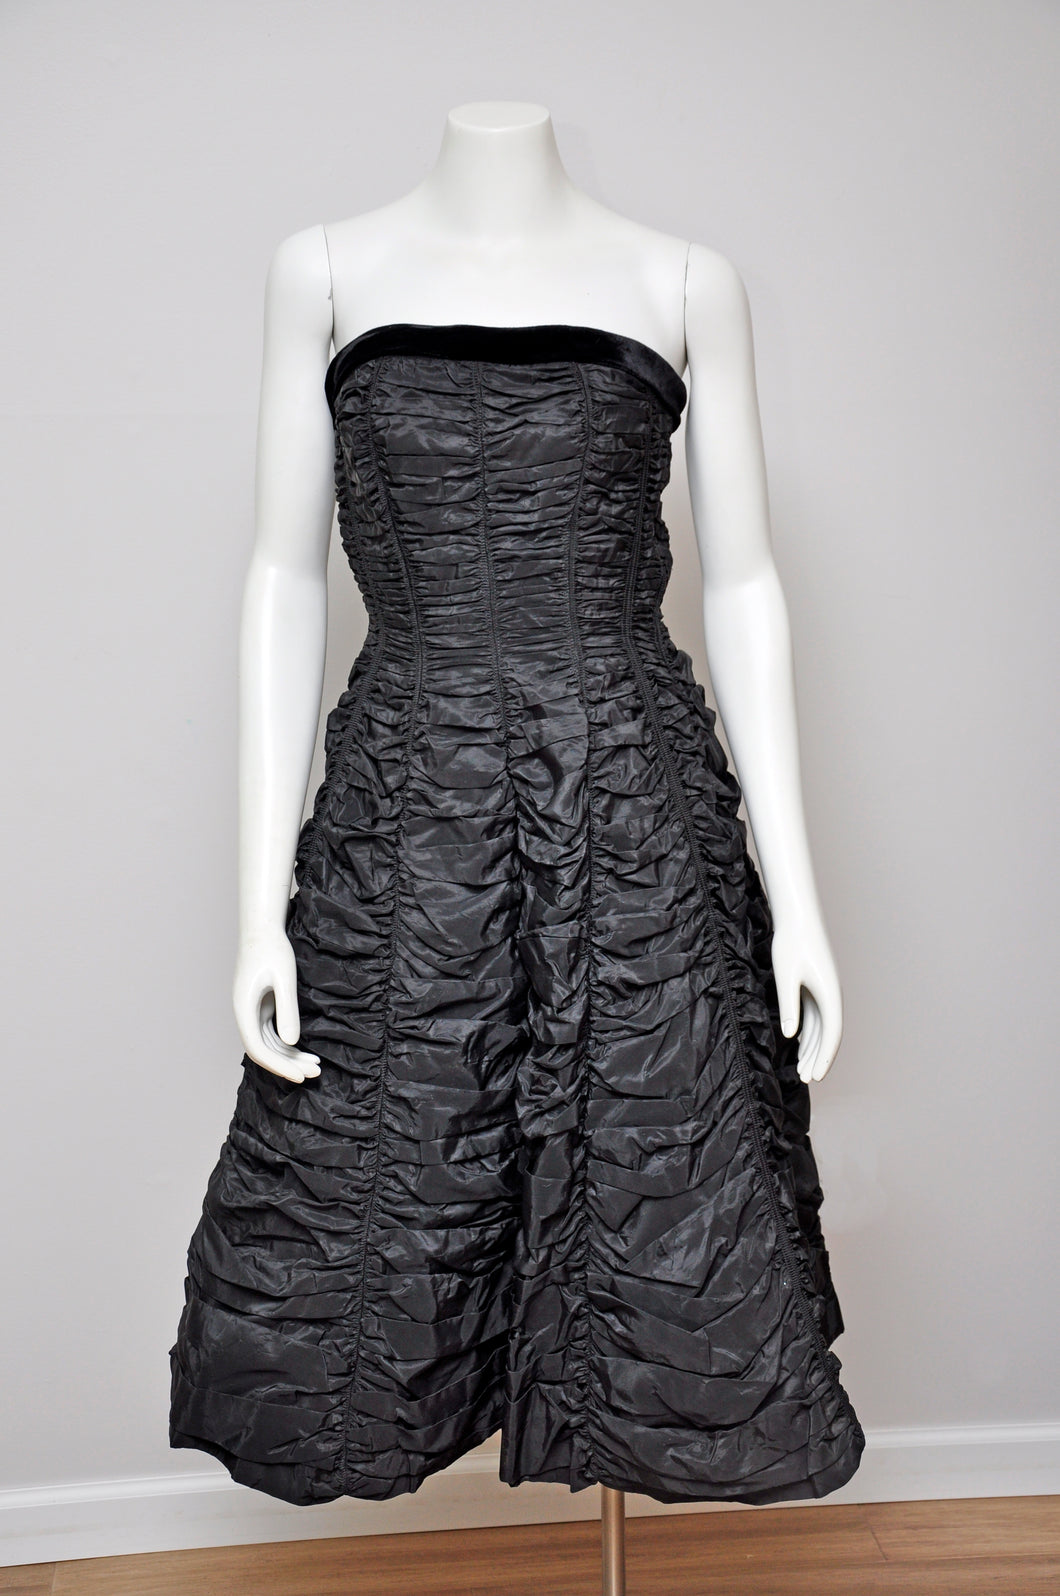 1950s Suzy Perette black taffeta party dress XS/S